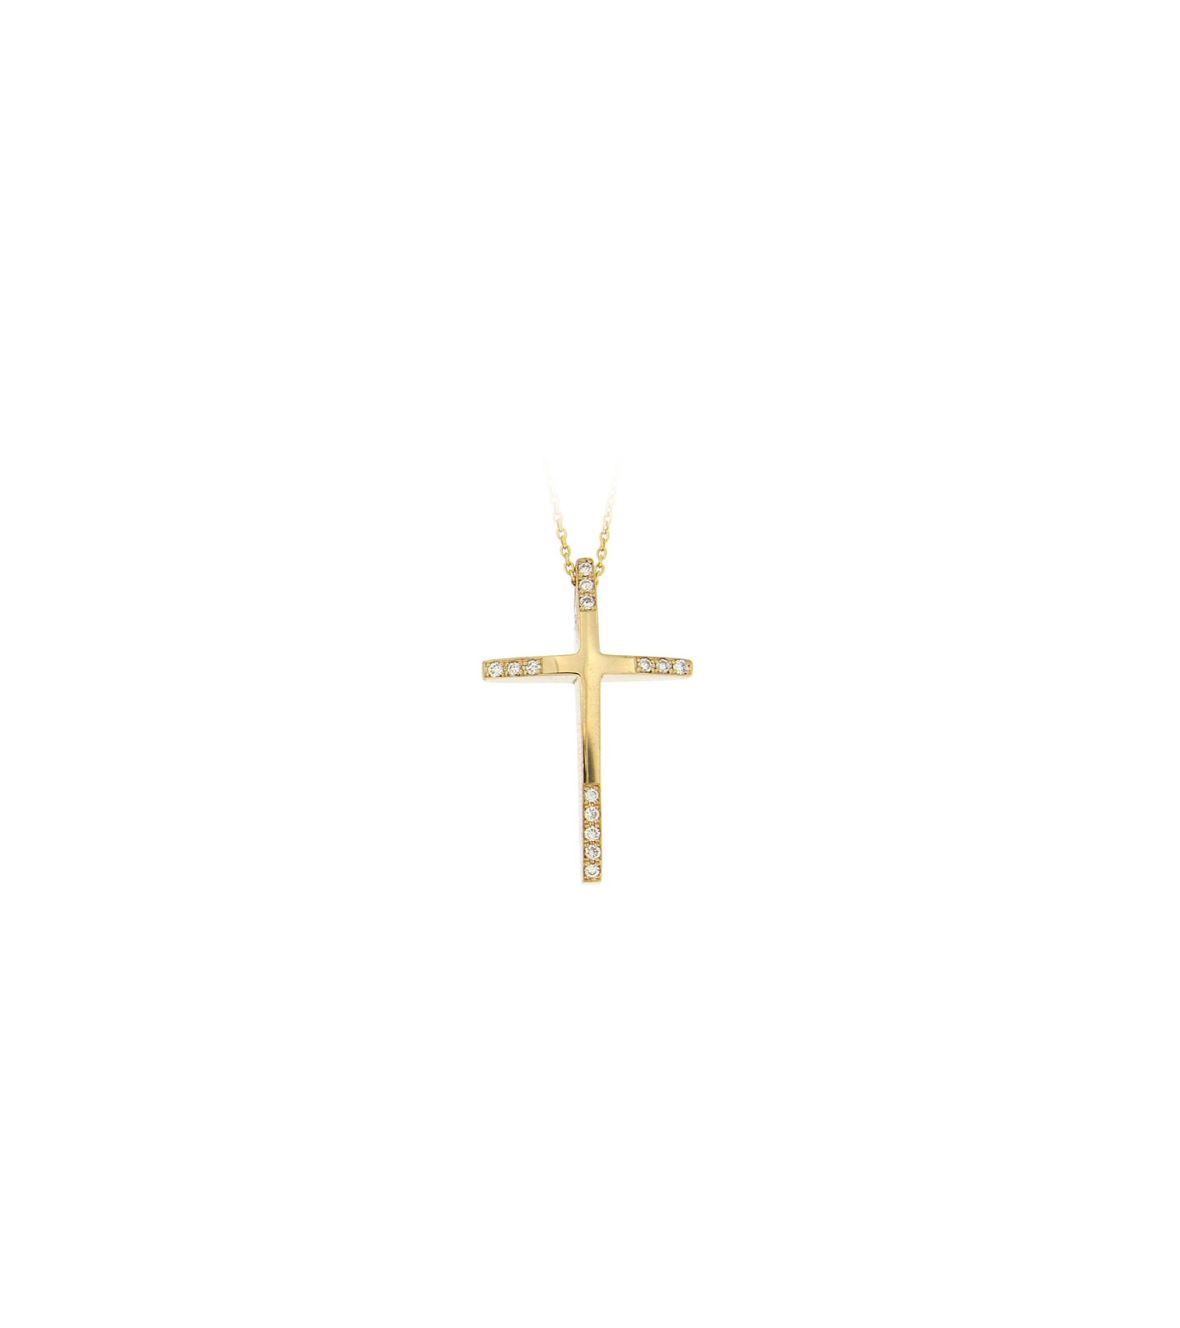 Yello Gold Cross with Diamonds 03175